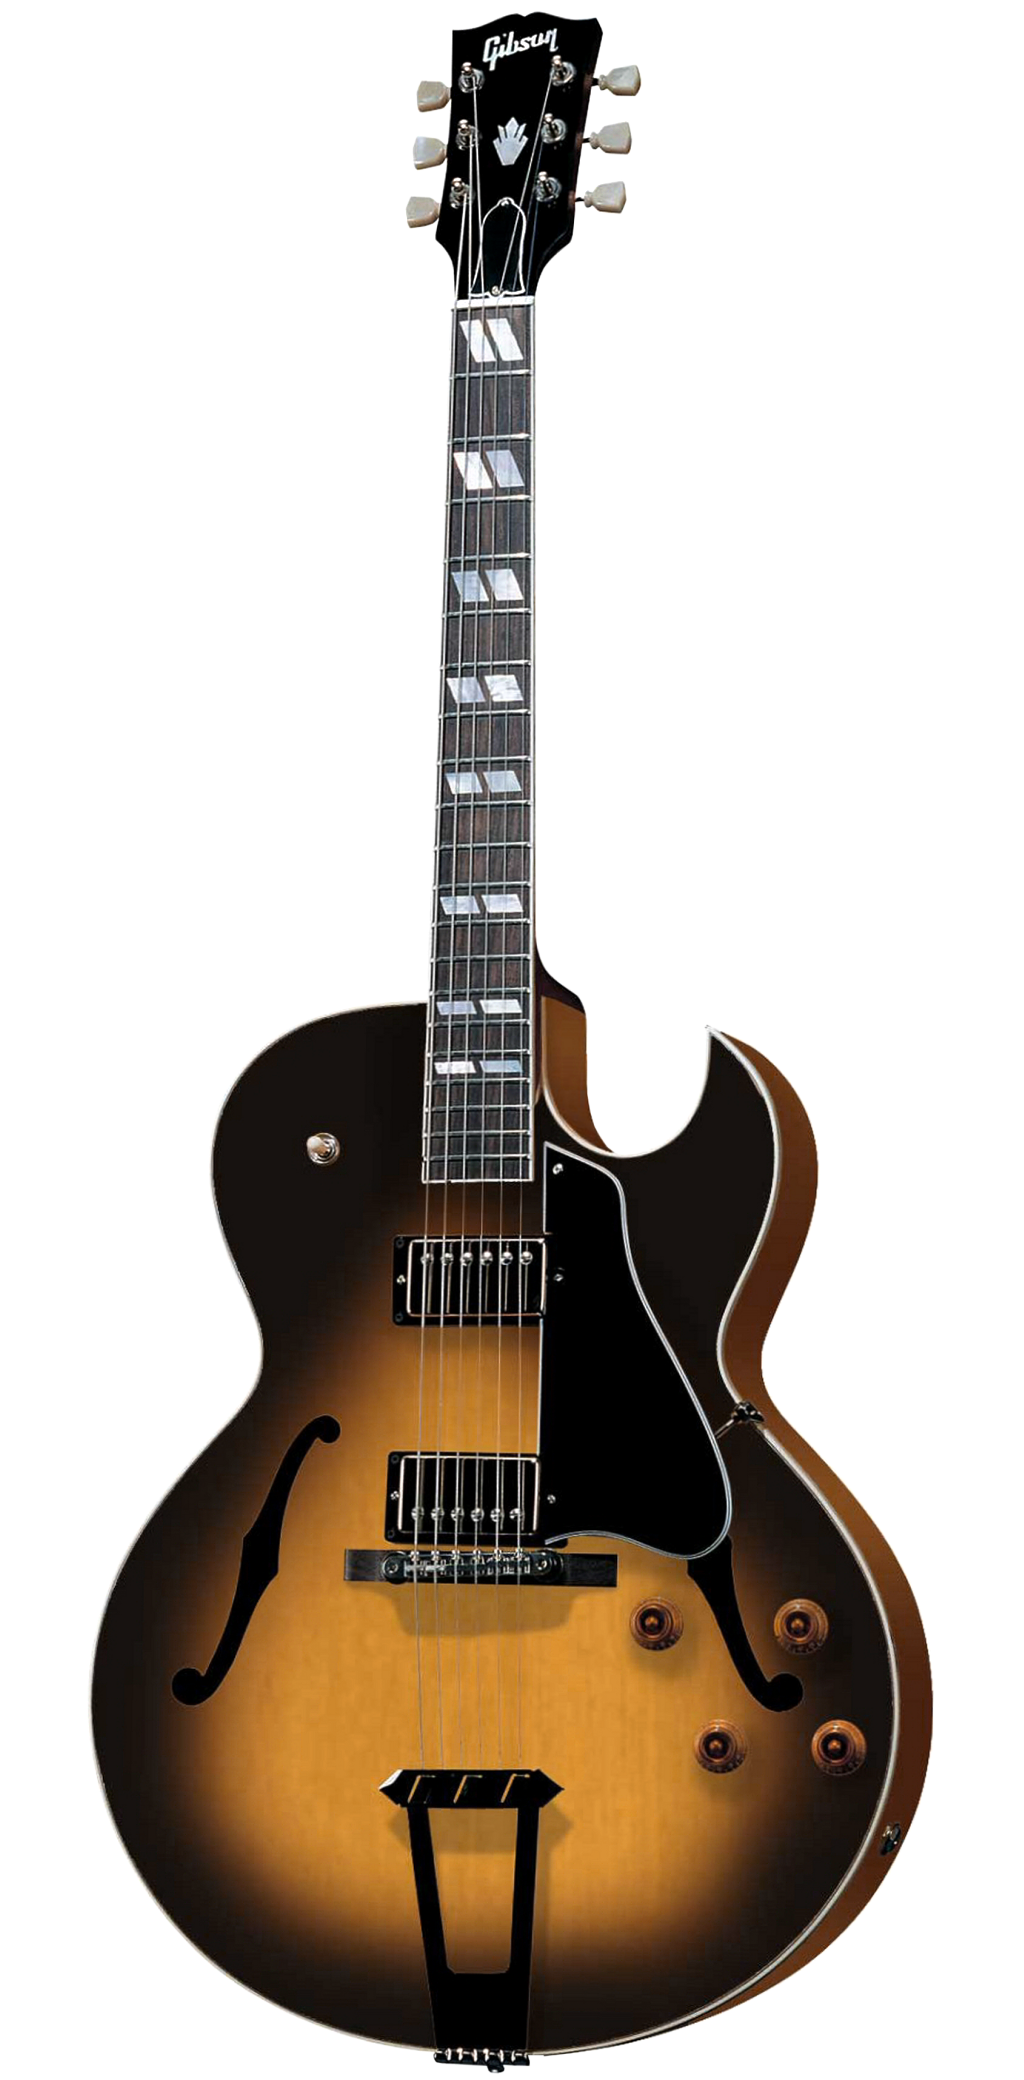 Gibson Les Paul tribute P90 E